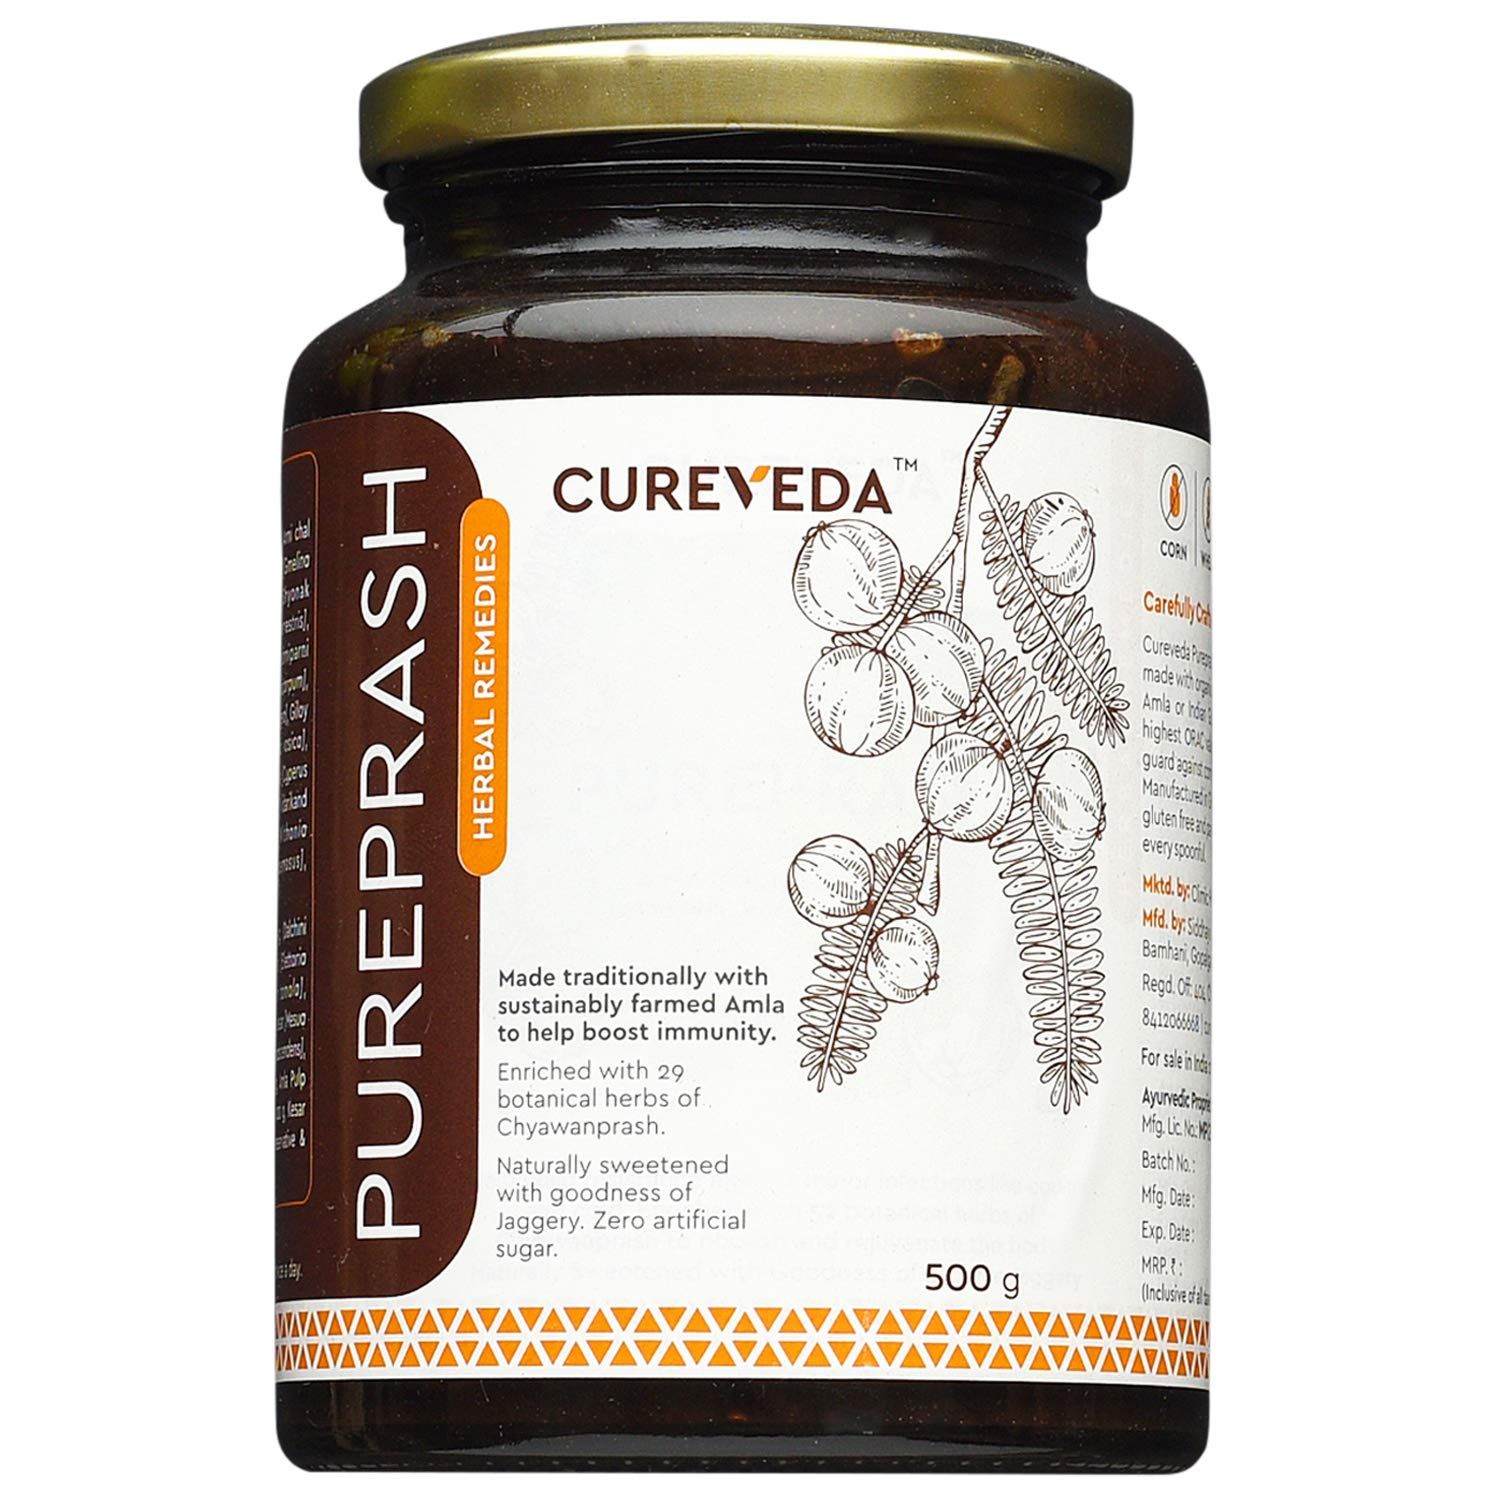 Cureveda Herbal Pureprash Immunity Booster Image